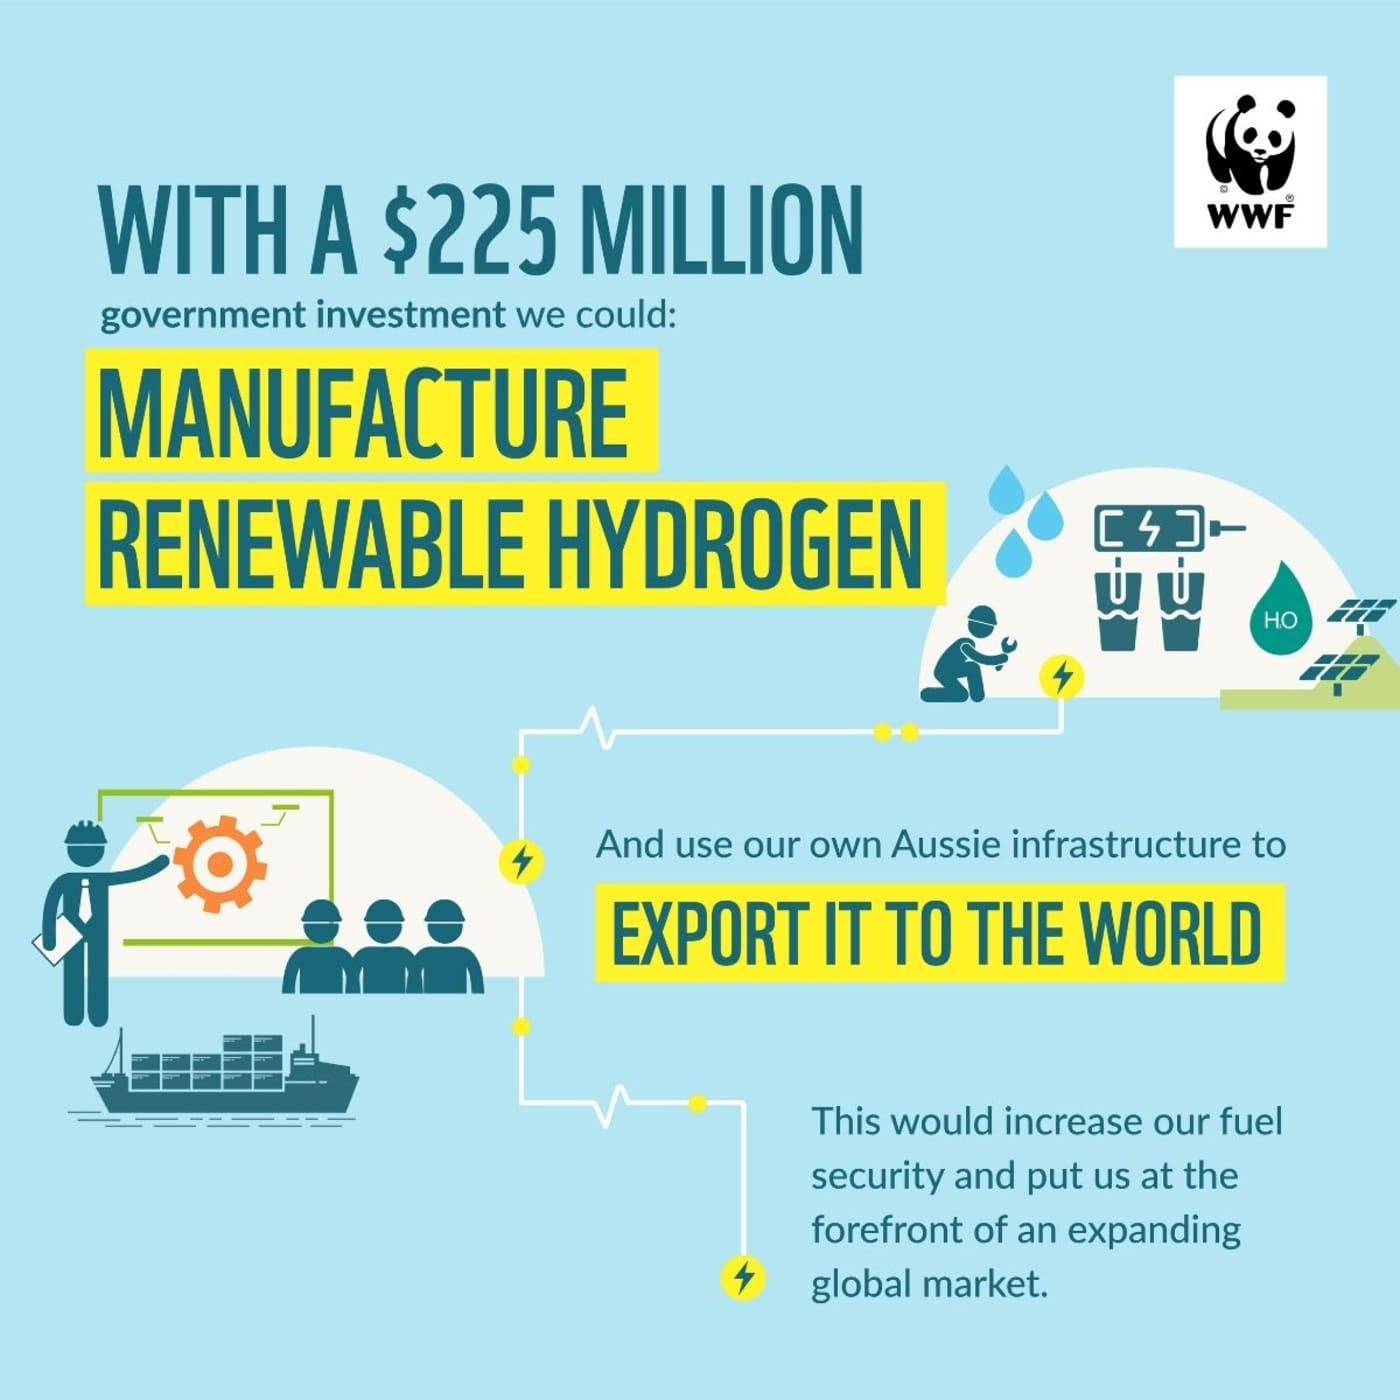 Export renewable hydrogen to the world